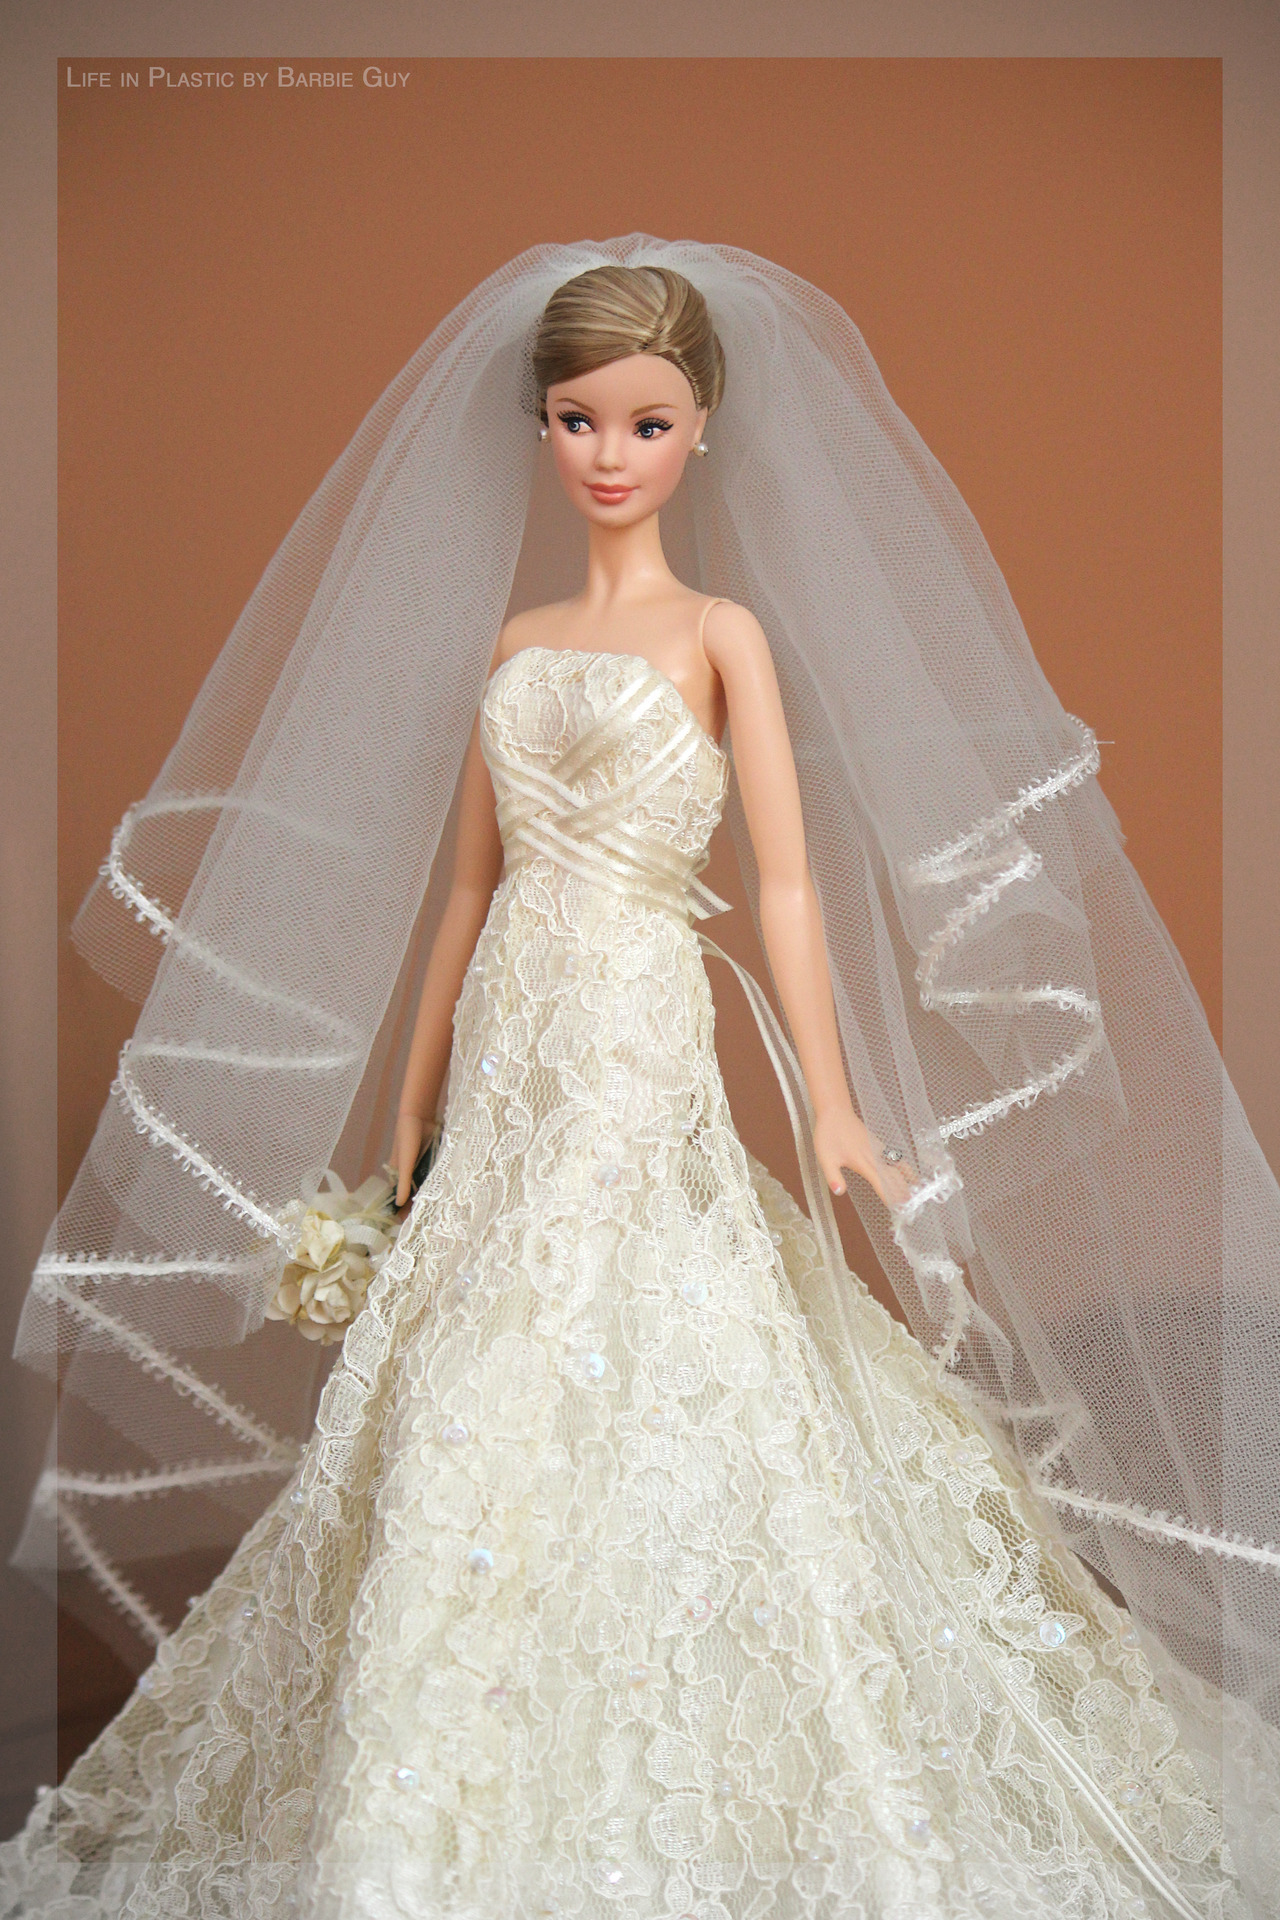 Life in Plastic — Carolina Herrera Bride™ doll